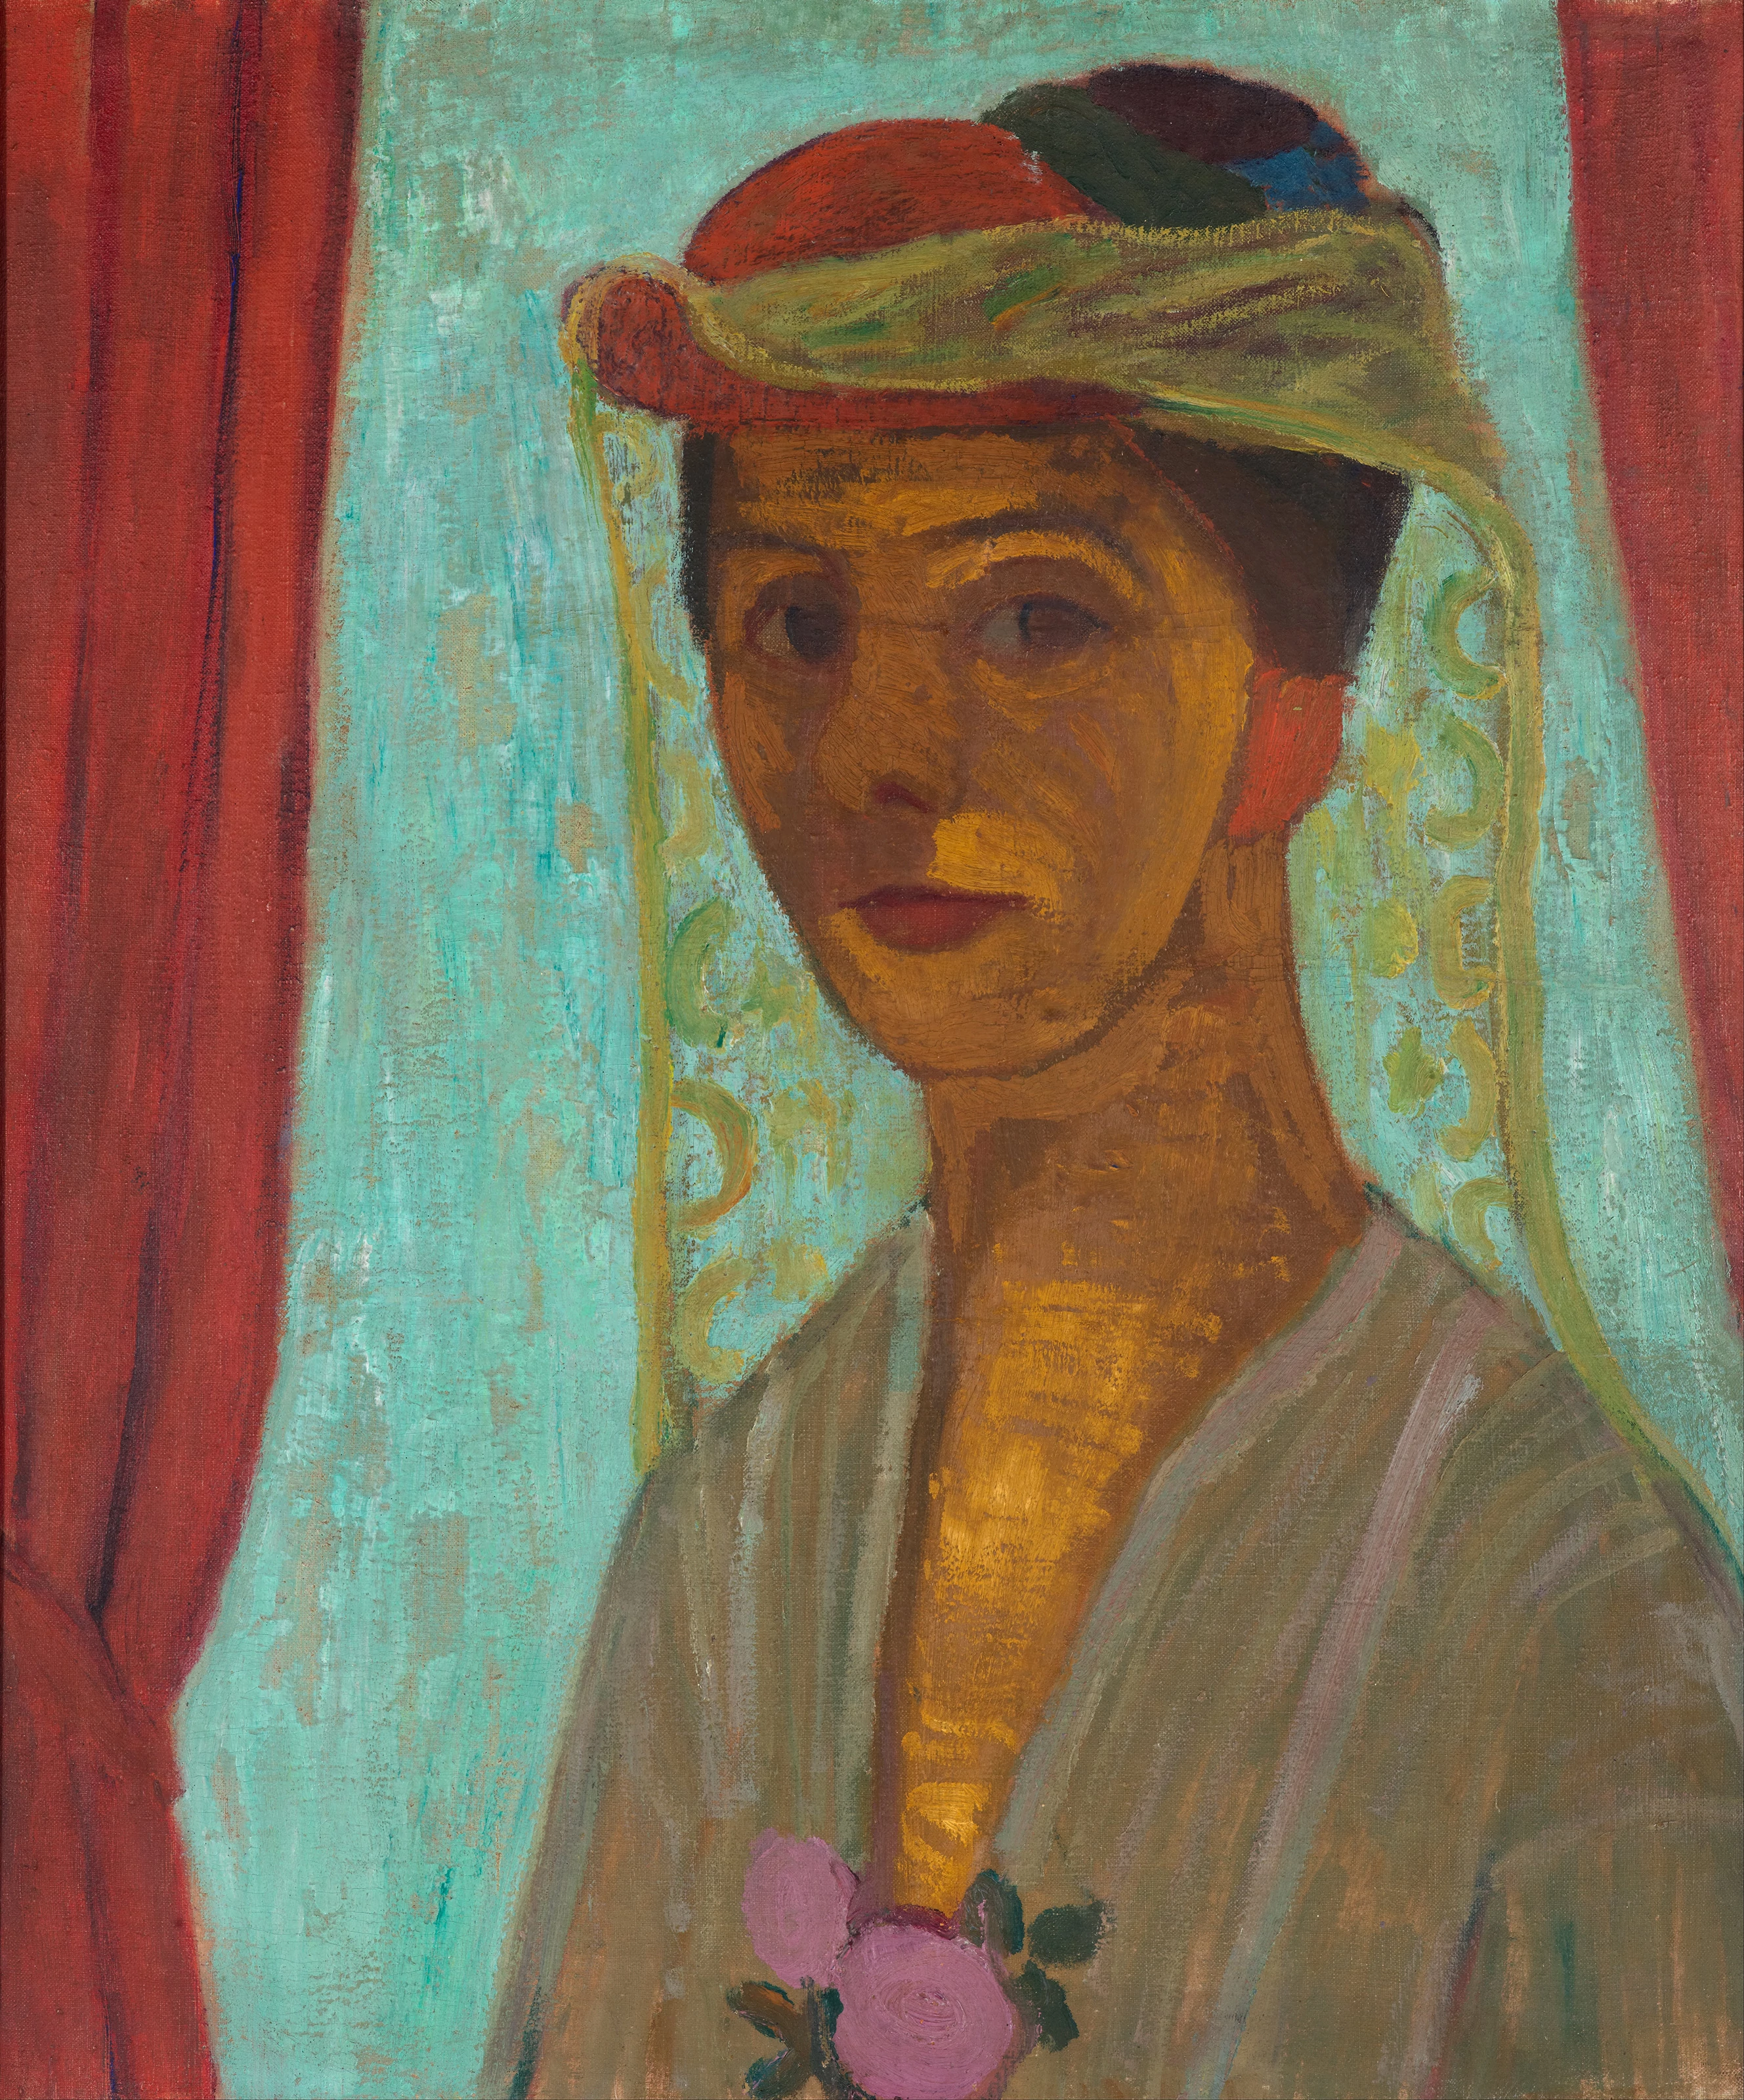 Self-portrait with hat and veil, Paula Modersohn-Becker